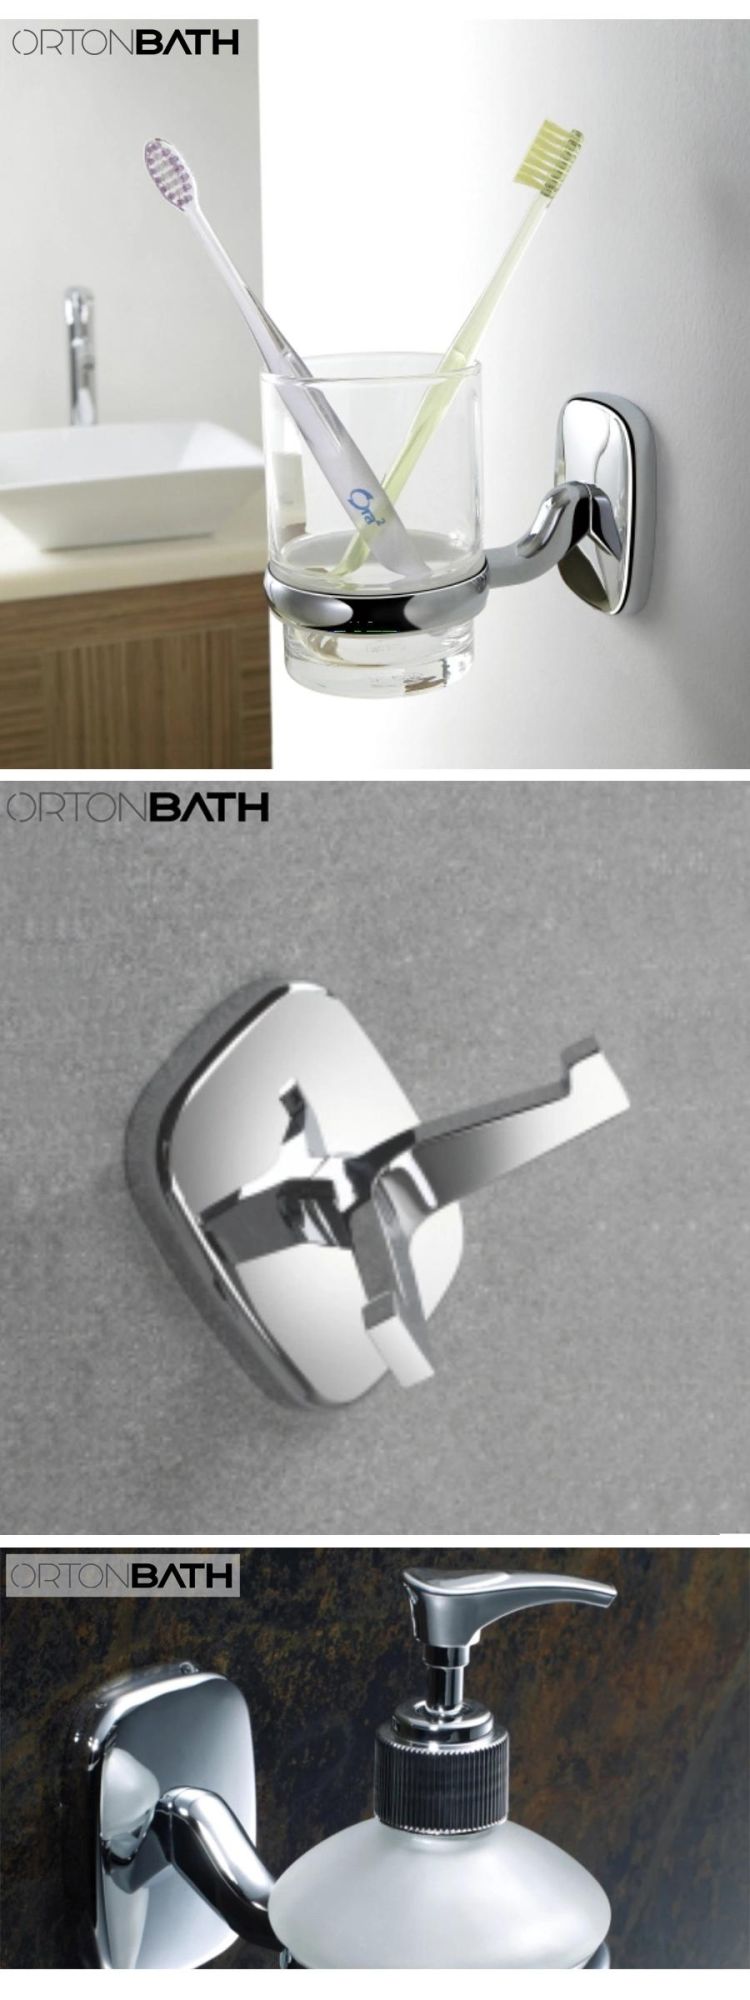 Rectangular Brass Zinc Alloy Base Bathroom Accessories with Robe Hook Tumbler Soap Holder Dispenser